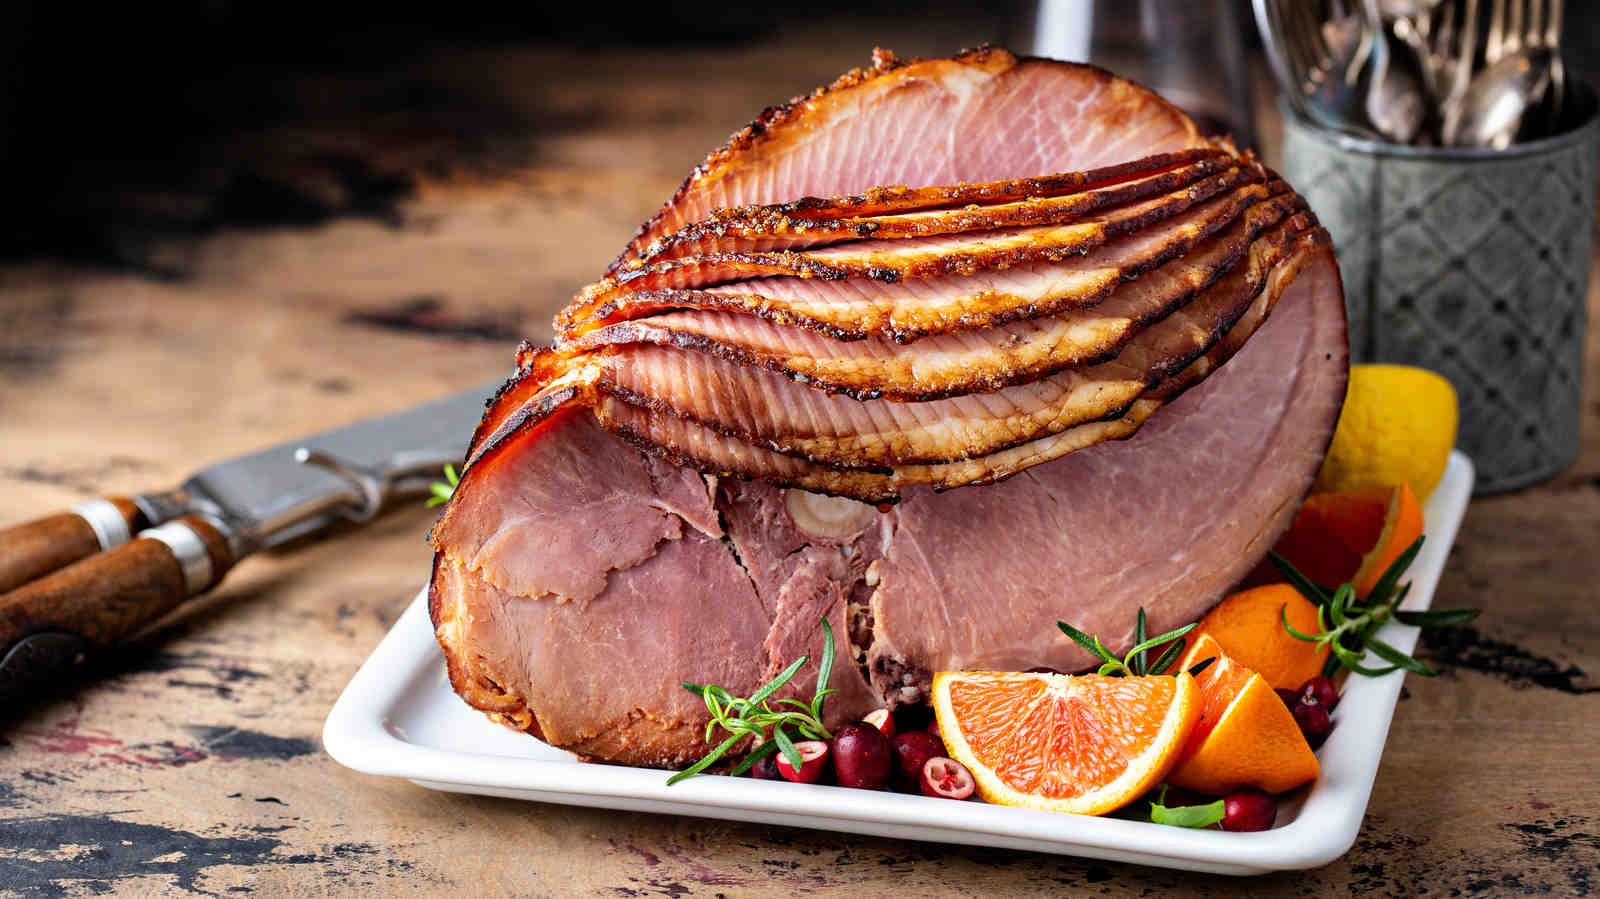 Can you serve glazed ham cold?